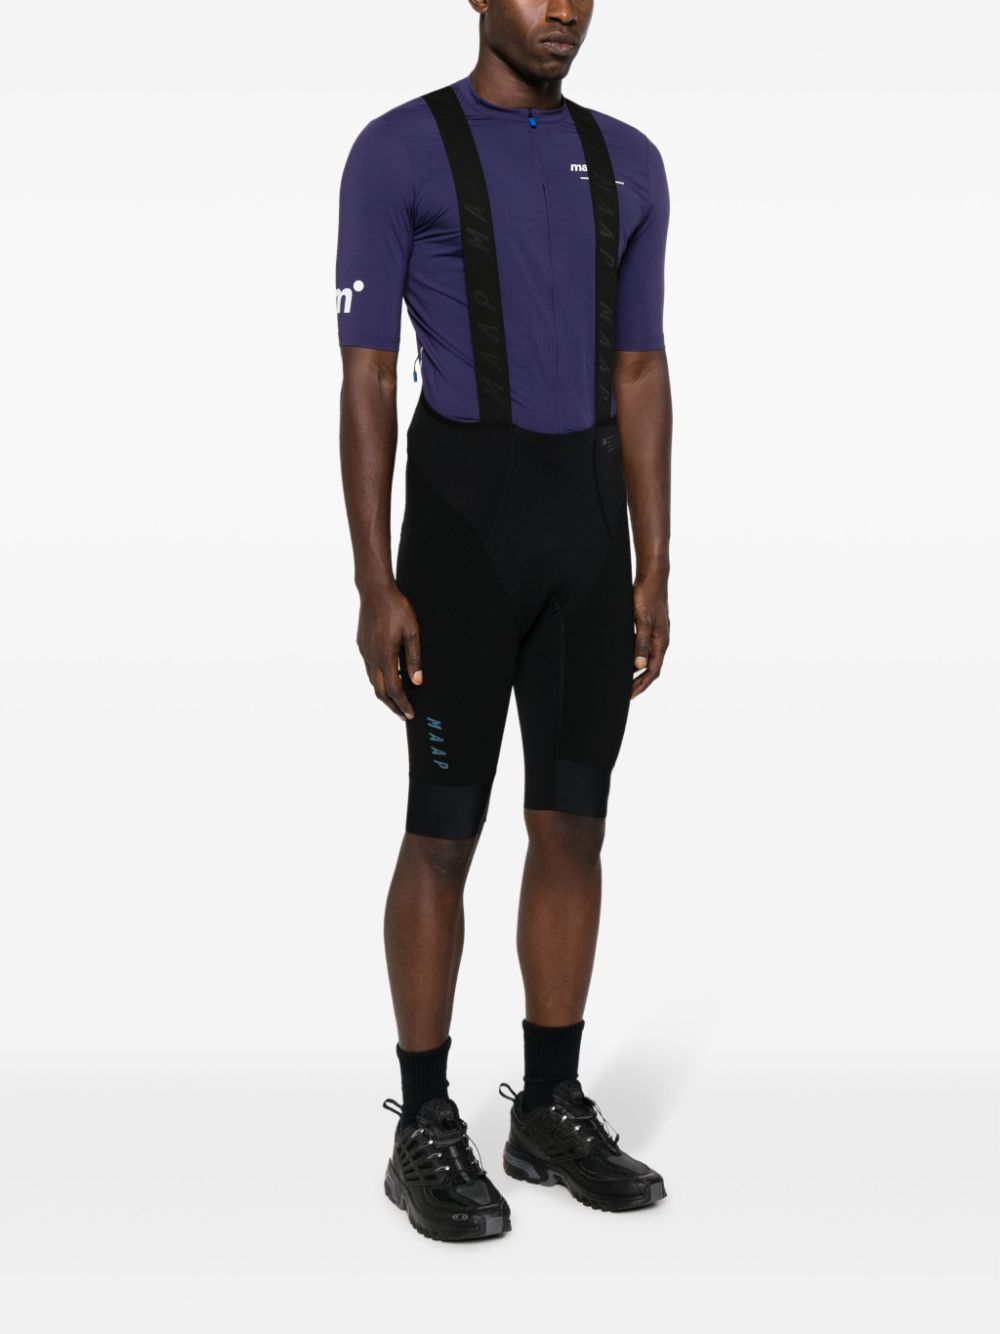 Pro Bib 2.0 cycling shorts